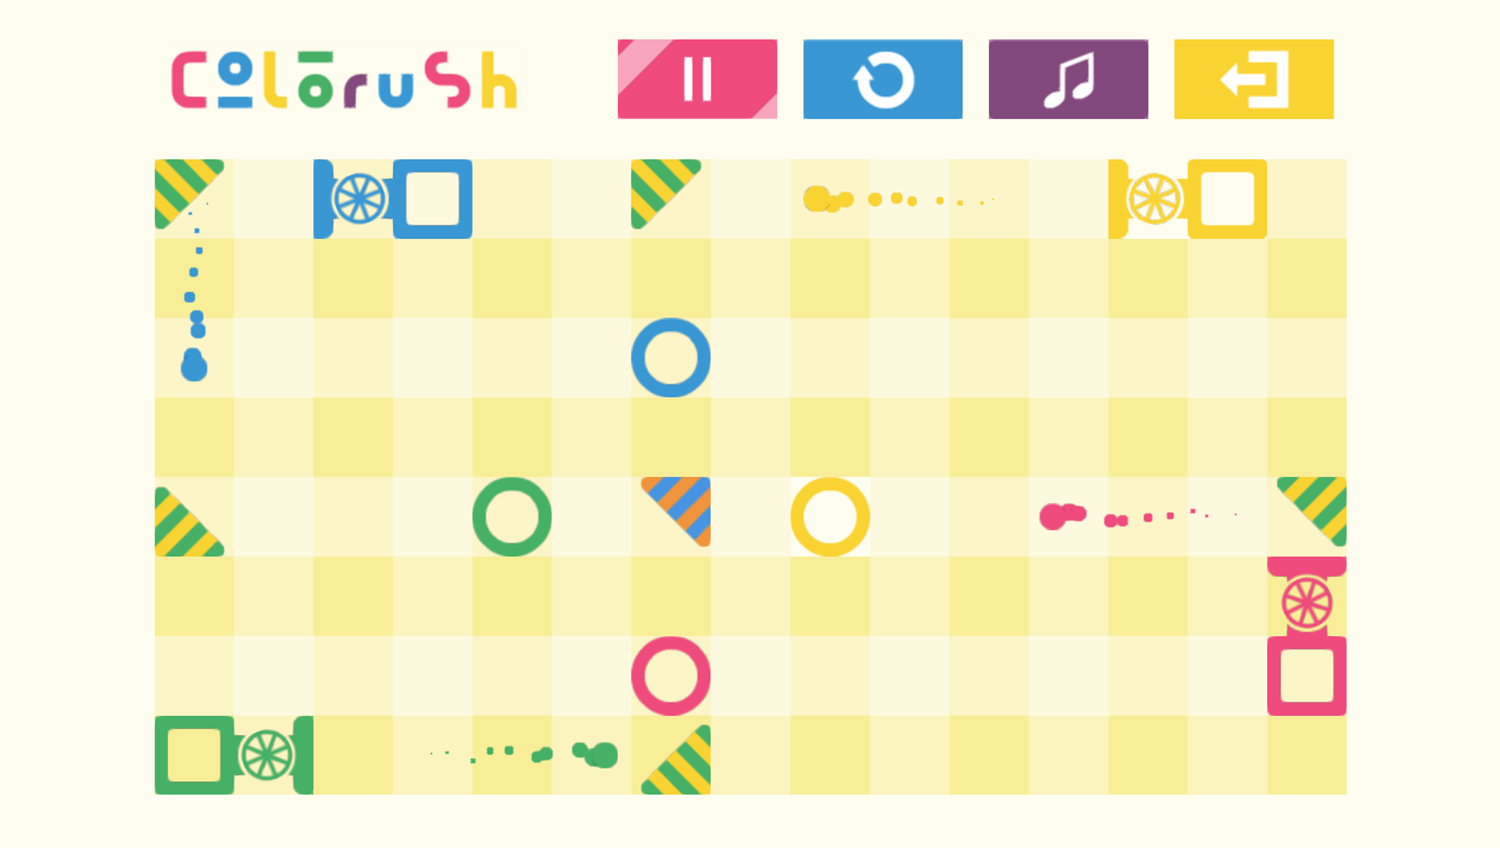 Colorush Game Play Puzzle Screenshot.